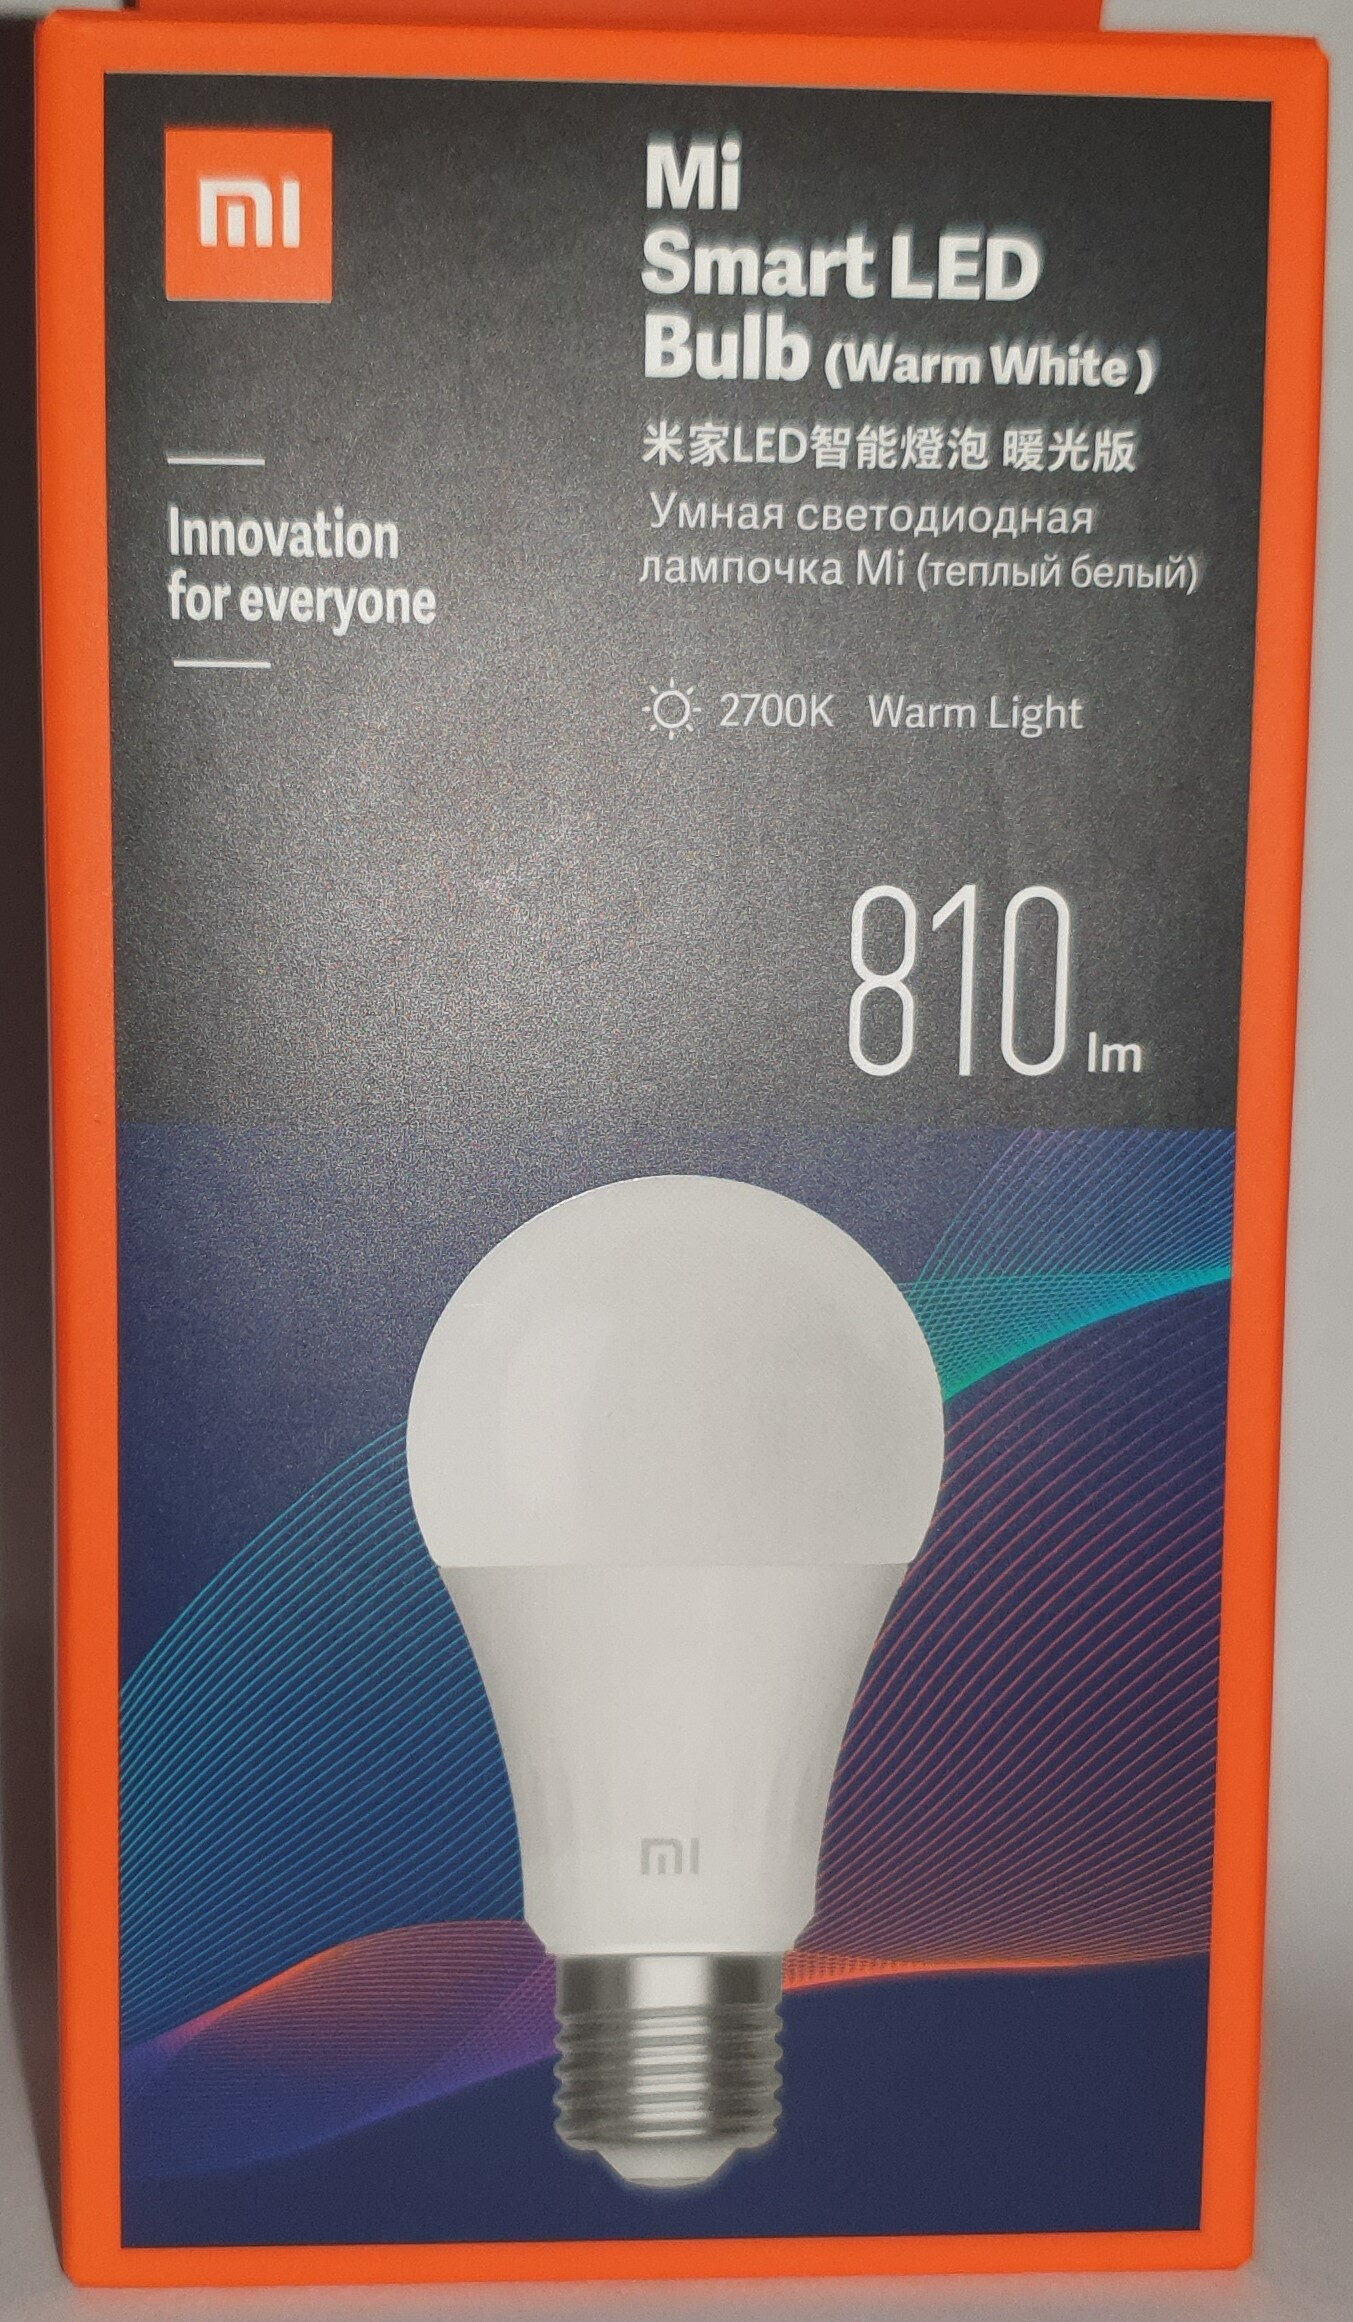 Mi Smart LED Bulb (Warm White) - Produit - ru